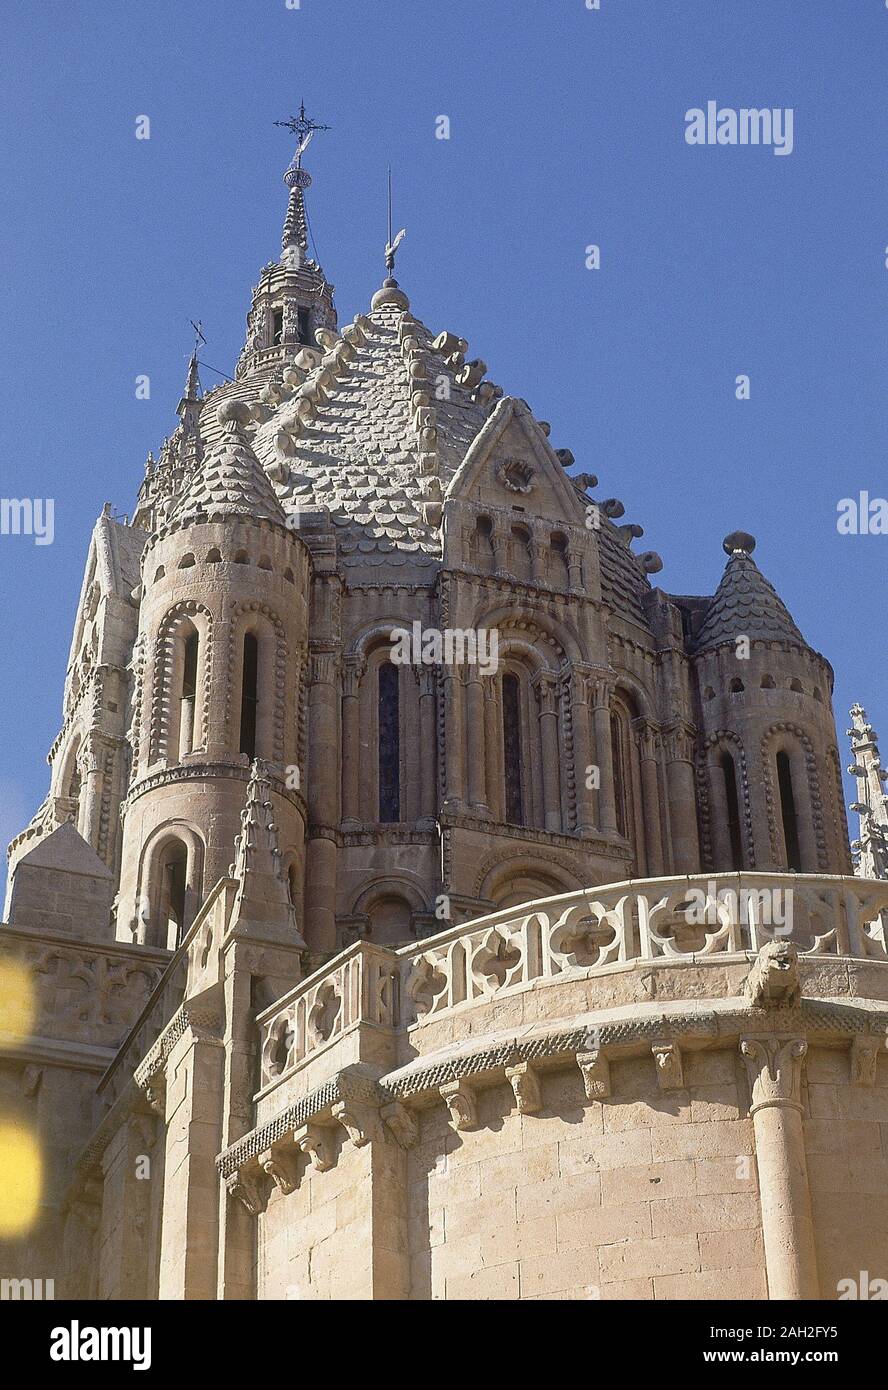 TORRE DEL GALLO - Siglo XII - ROMANICO SALMANTINO. Ubicación: Catedral Vieja. España. Foto de stock